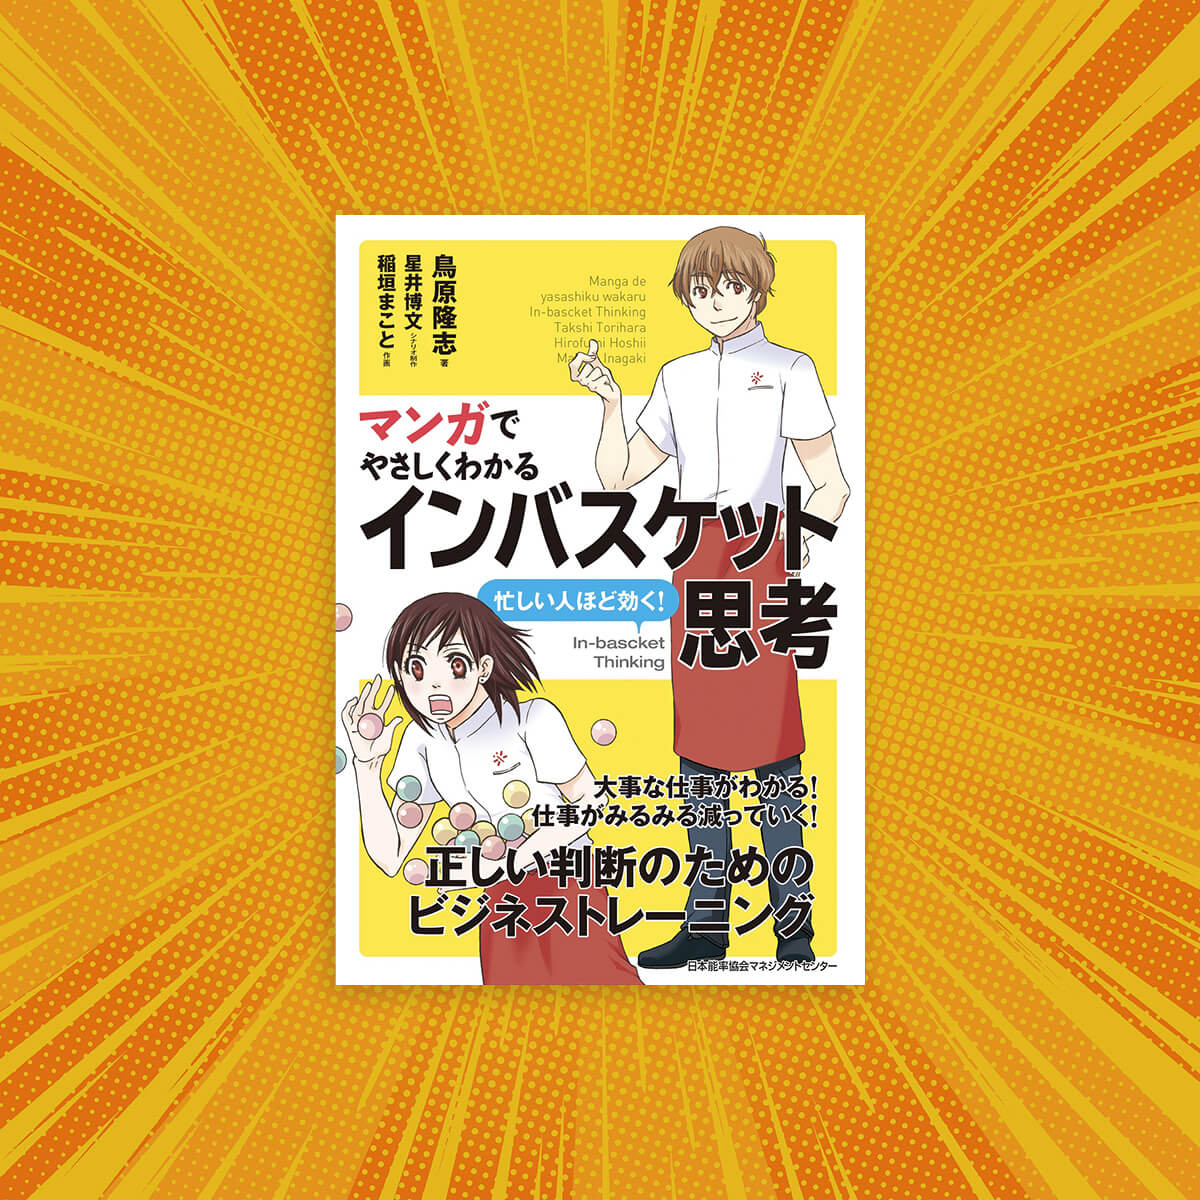 Easy reading through Manga | In-Basket Theory